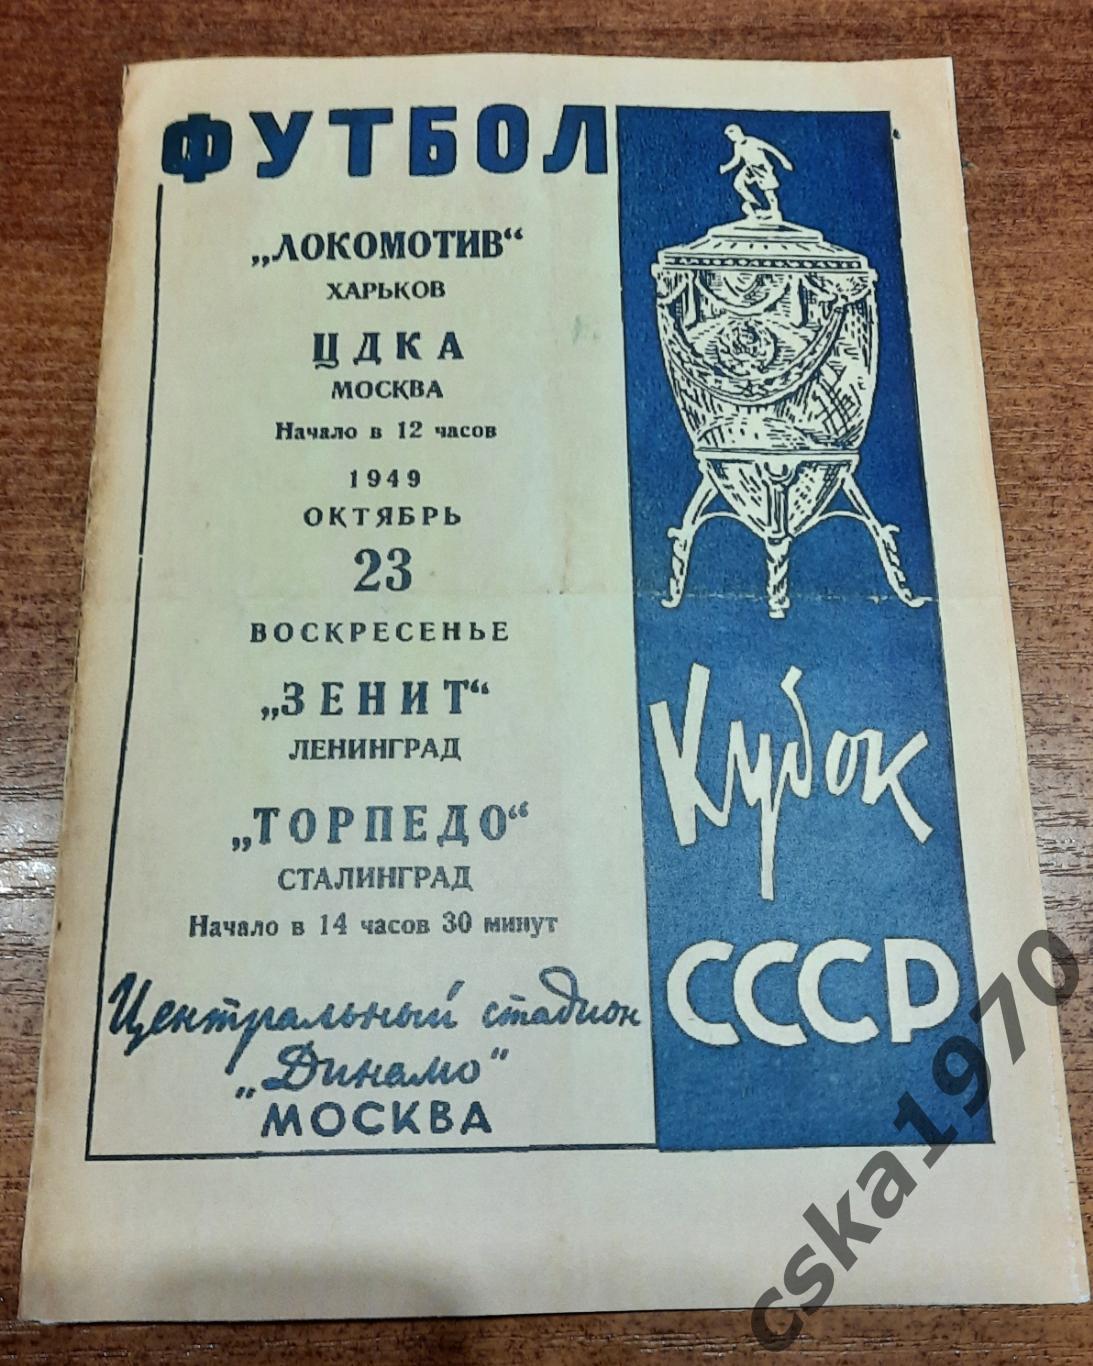 Локомотив Харьков- ЦДКА, Зенит Торпедо Сталинград 1949 Копия!!!!